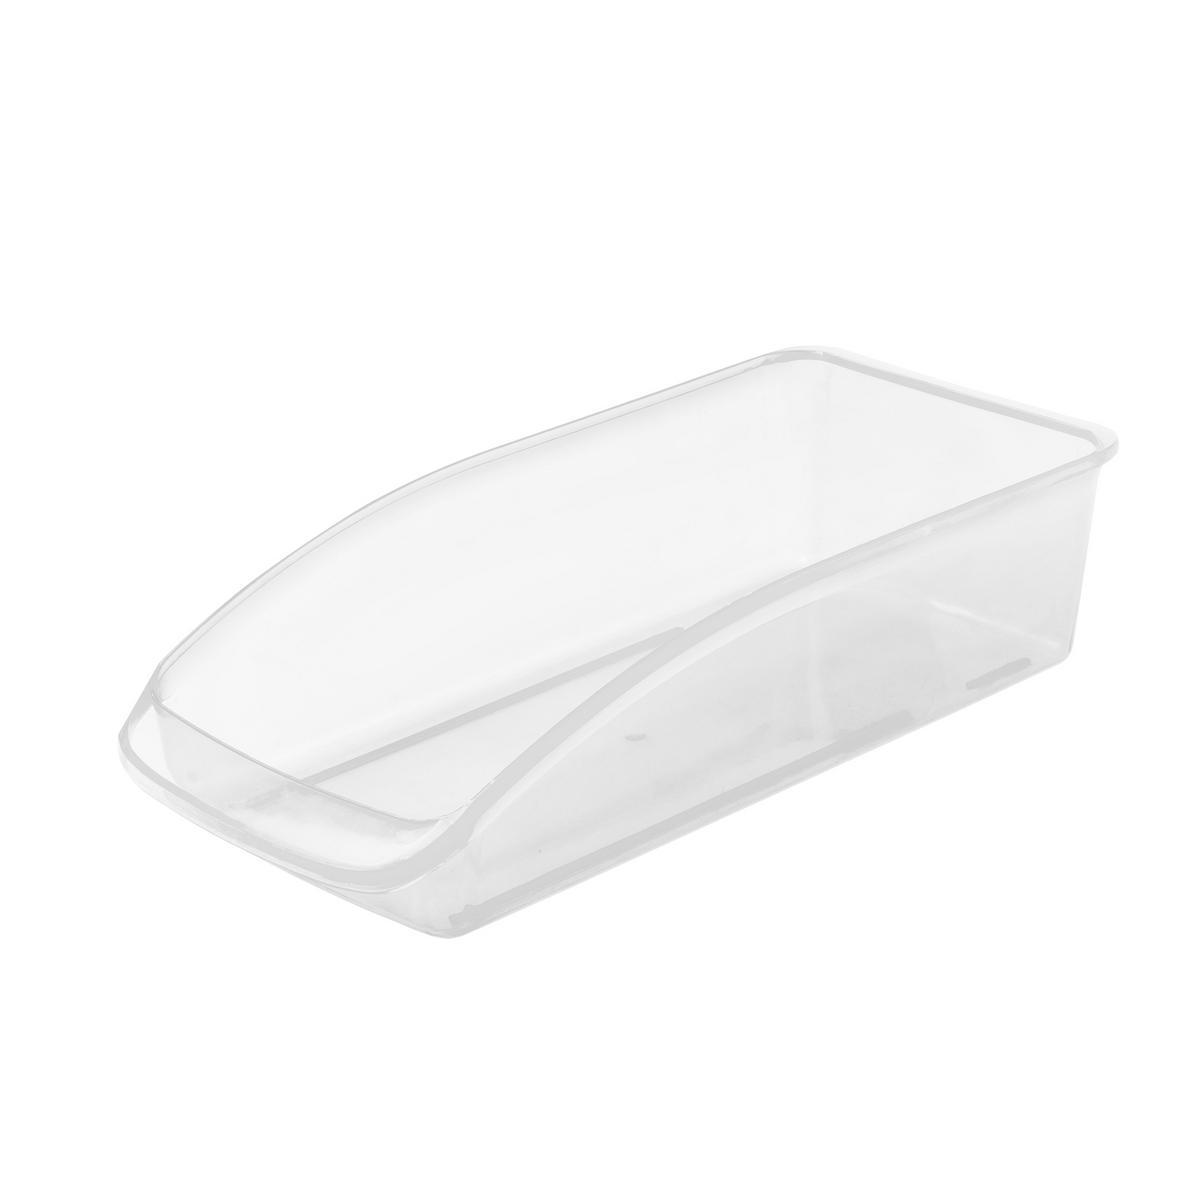 Casier de rangement frigo - Polystyrène - 32,5 x 15 x H 8 cm - Transparent